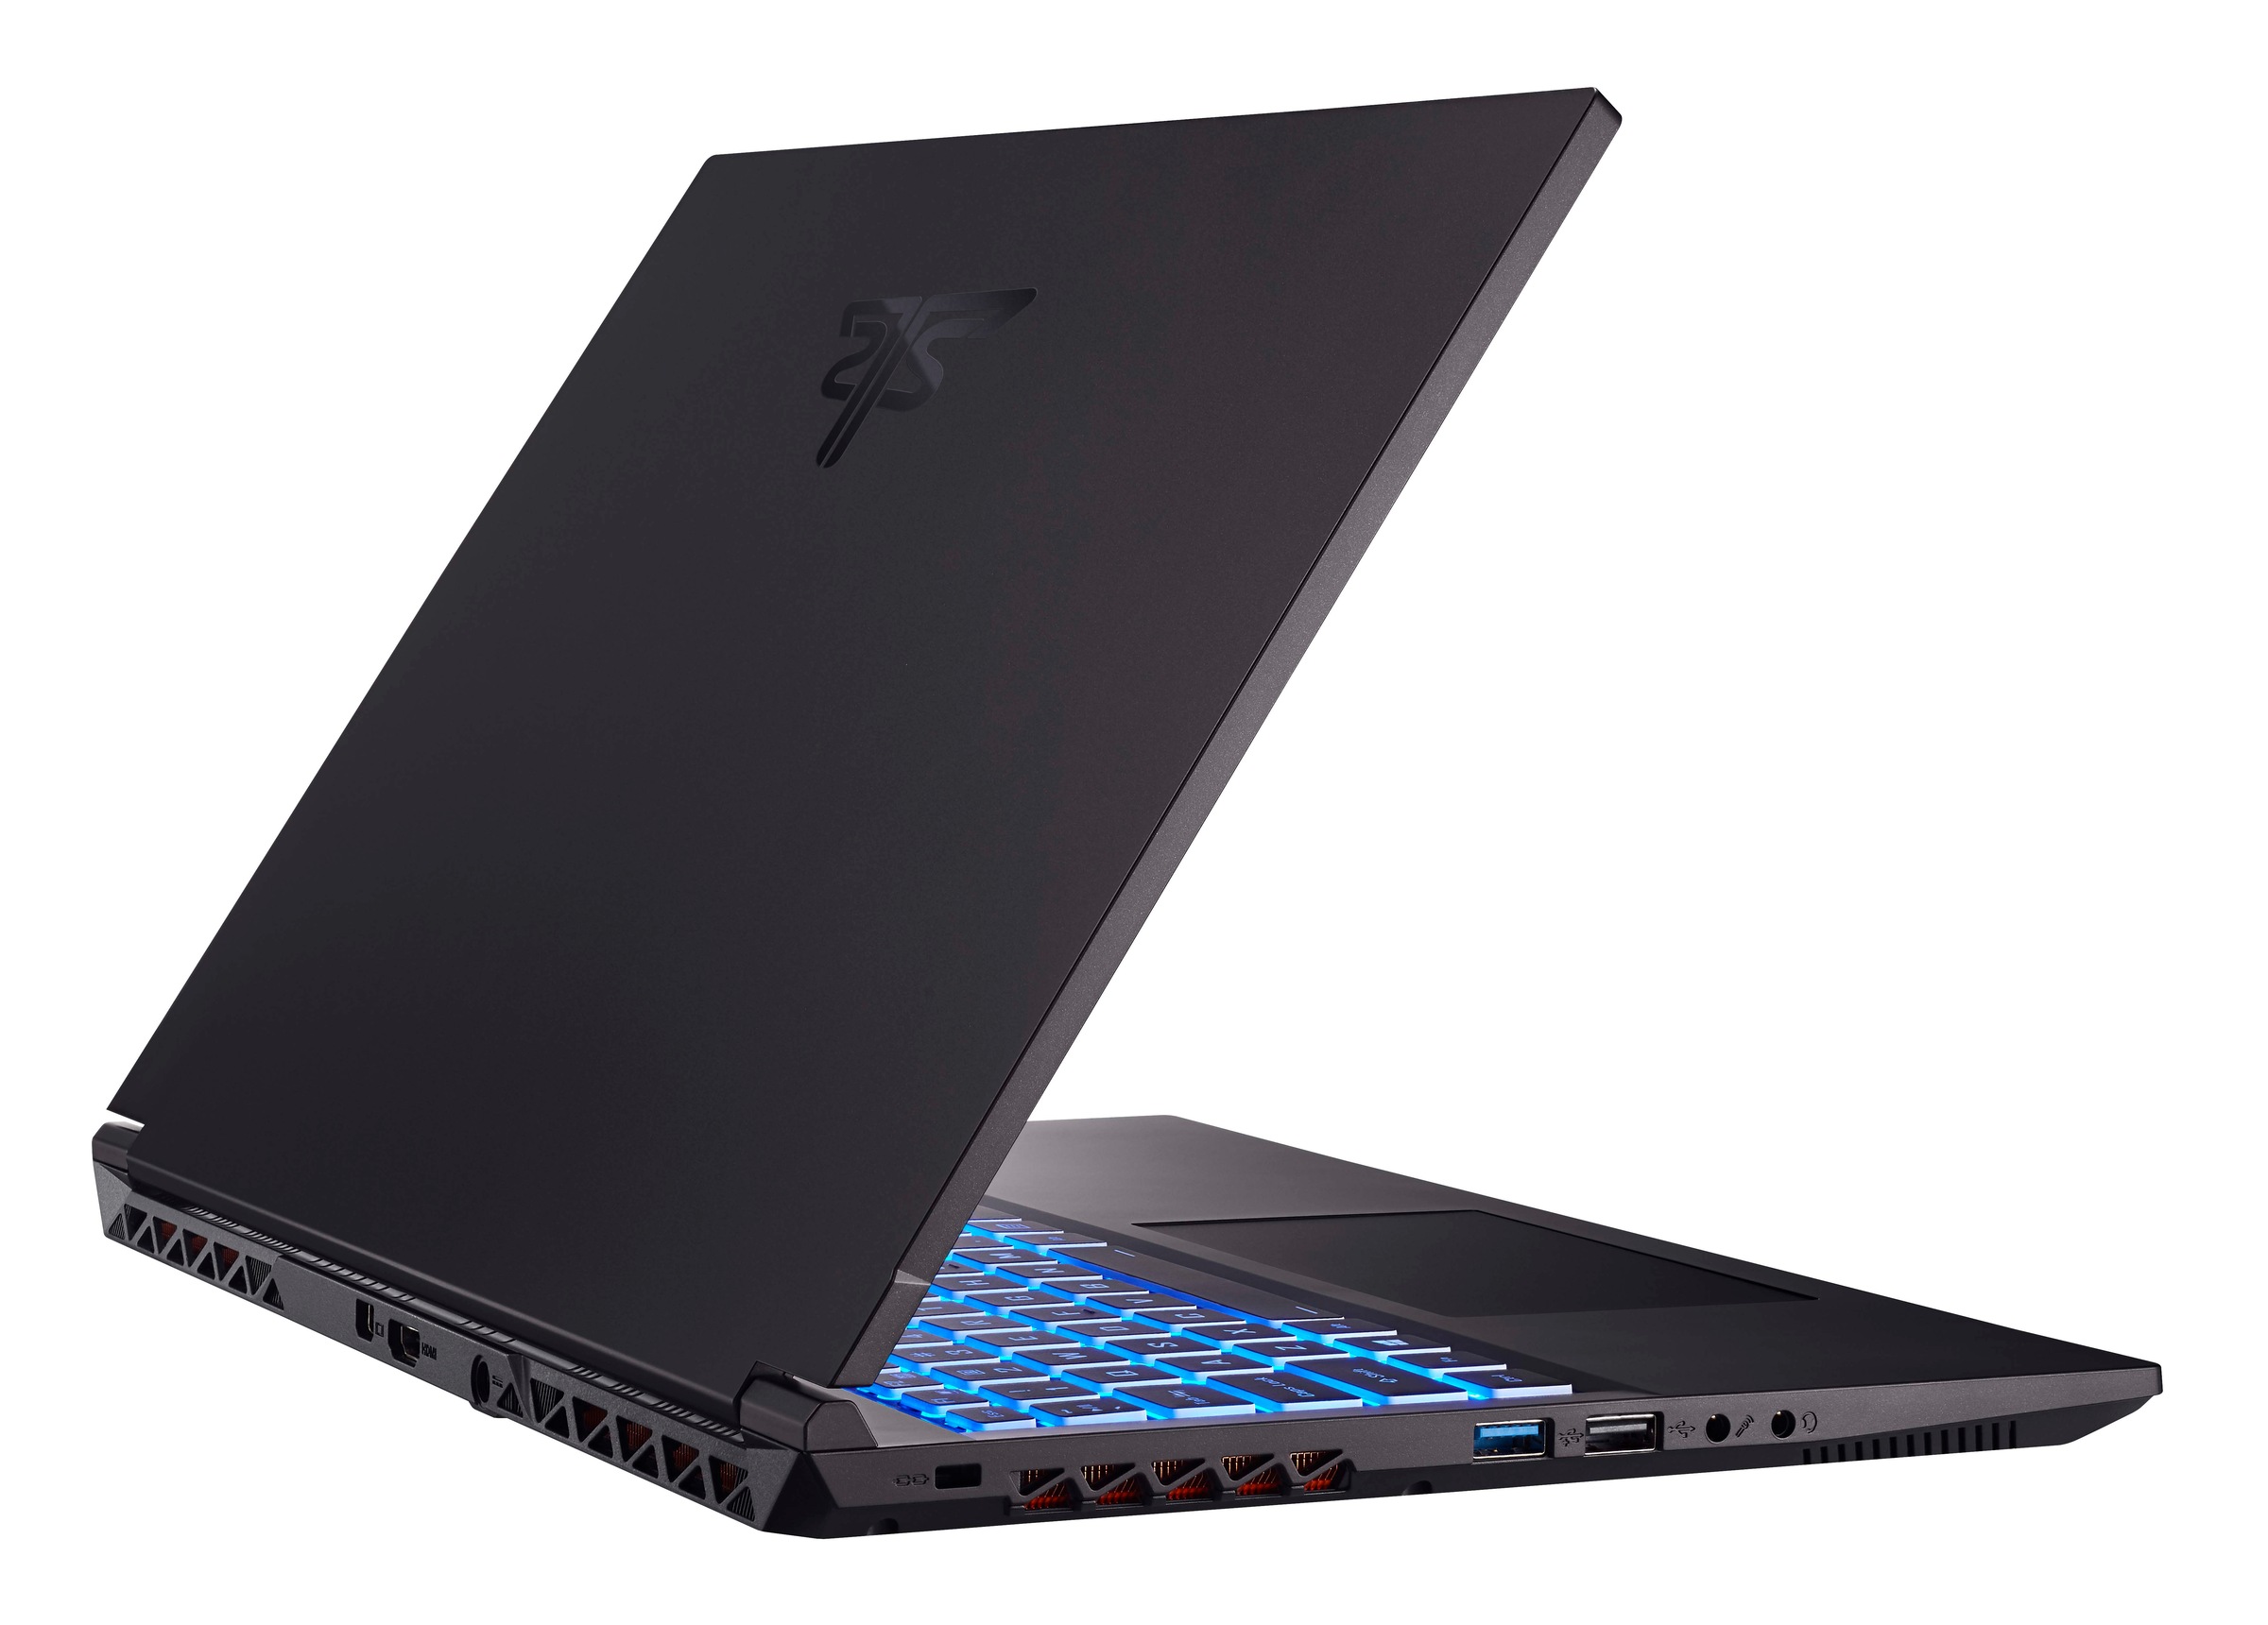 Hyrican Gaming-Notebook »Striker 1652«, 39,62 cm, / 15,6 Zoll, Intel, Core i5, GeForce RTX 3050 Ti, 480 GB SSD, Intel Core i5-11400H, 8 GB RAM, 144 Hz, ohne Betriebssystem